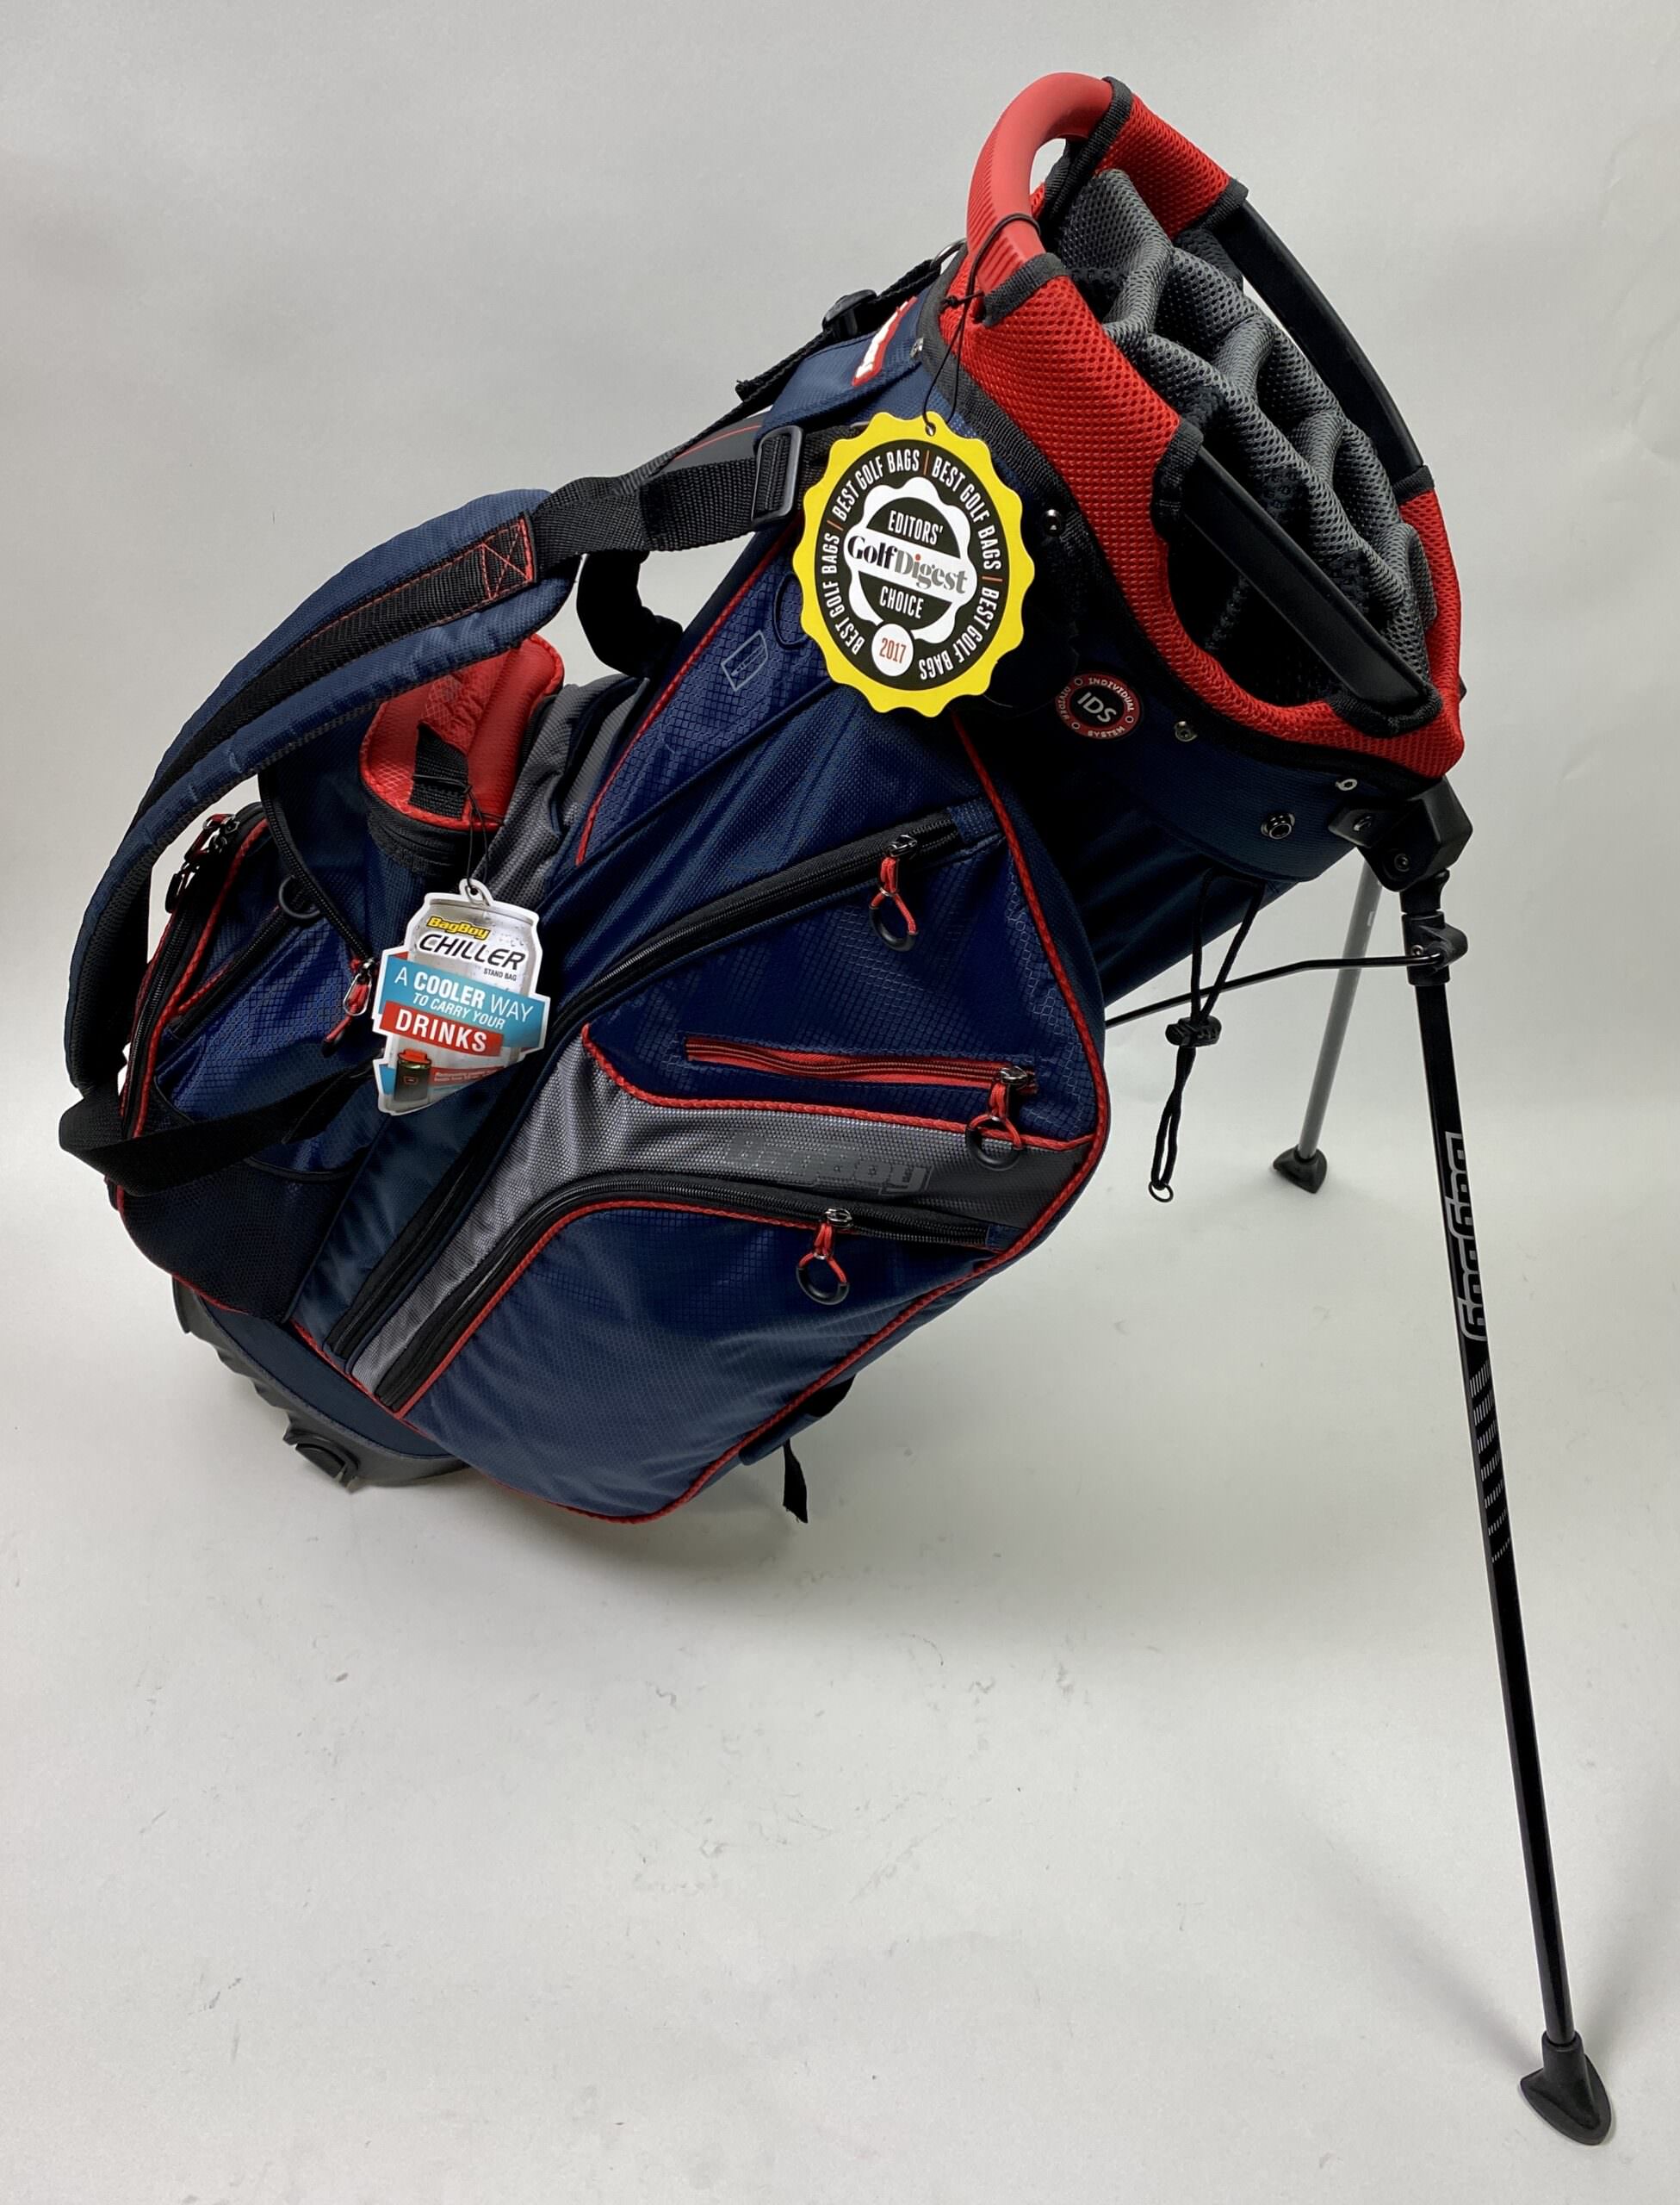 New Bag Boy Golf Chiller Hybrid 14Way Stand Bag Cart/Carry Red/Blue